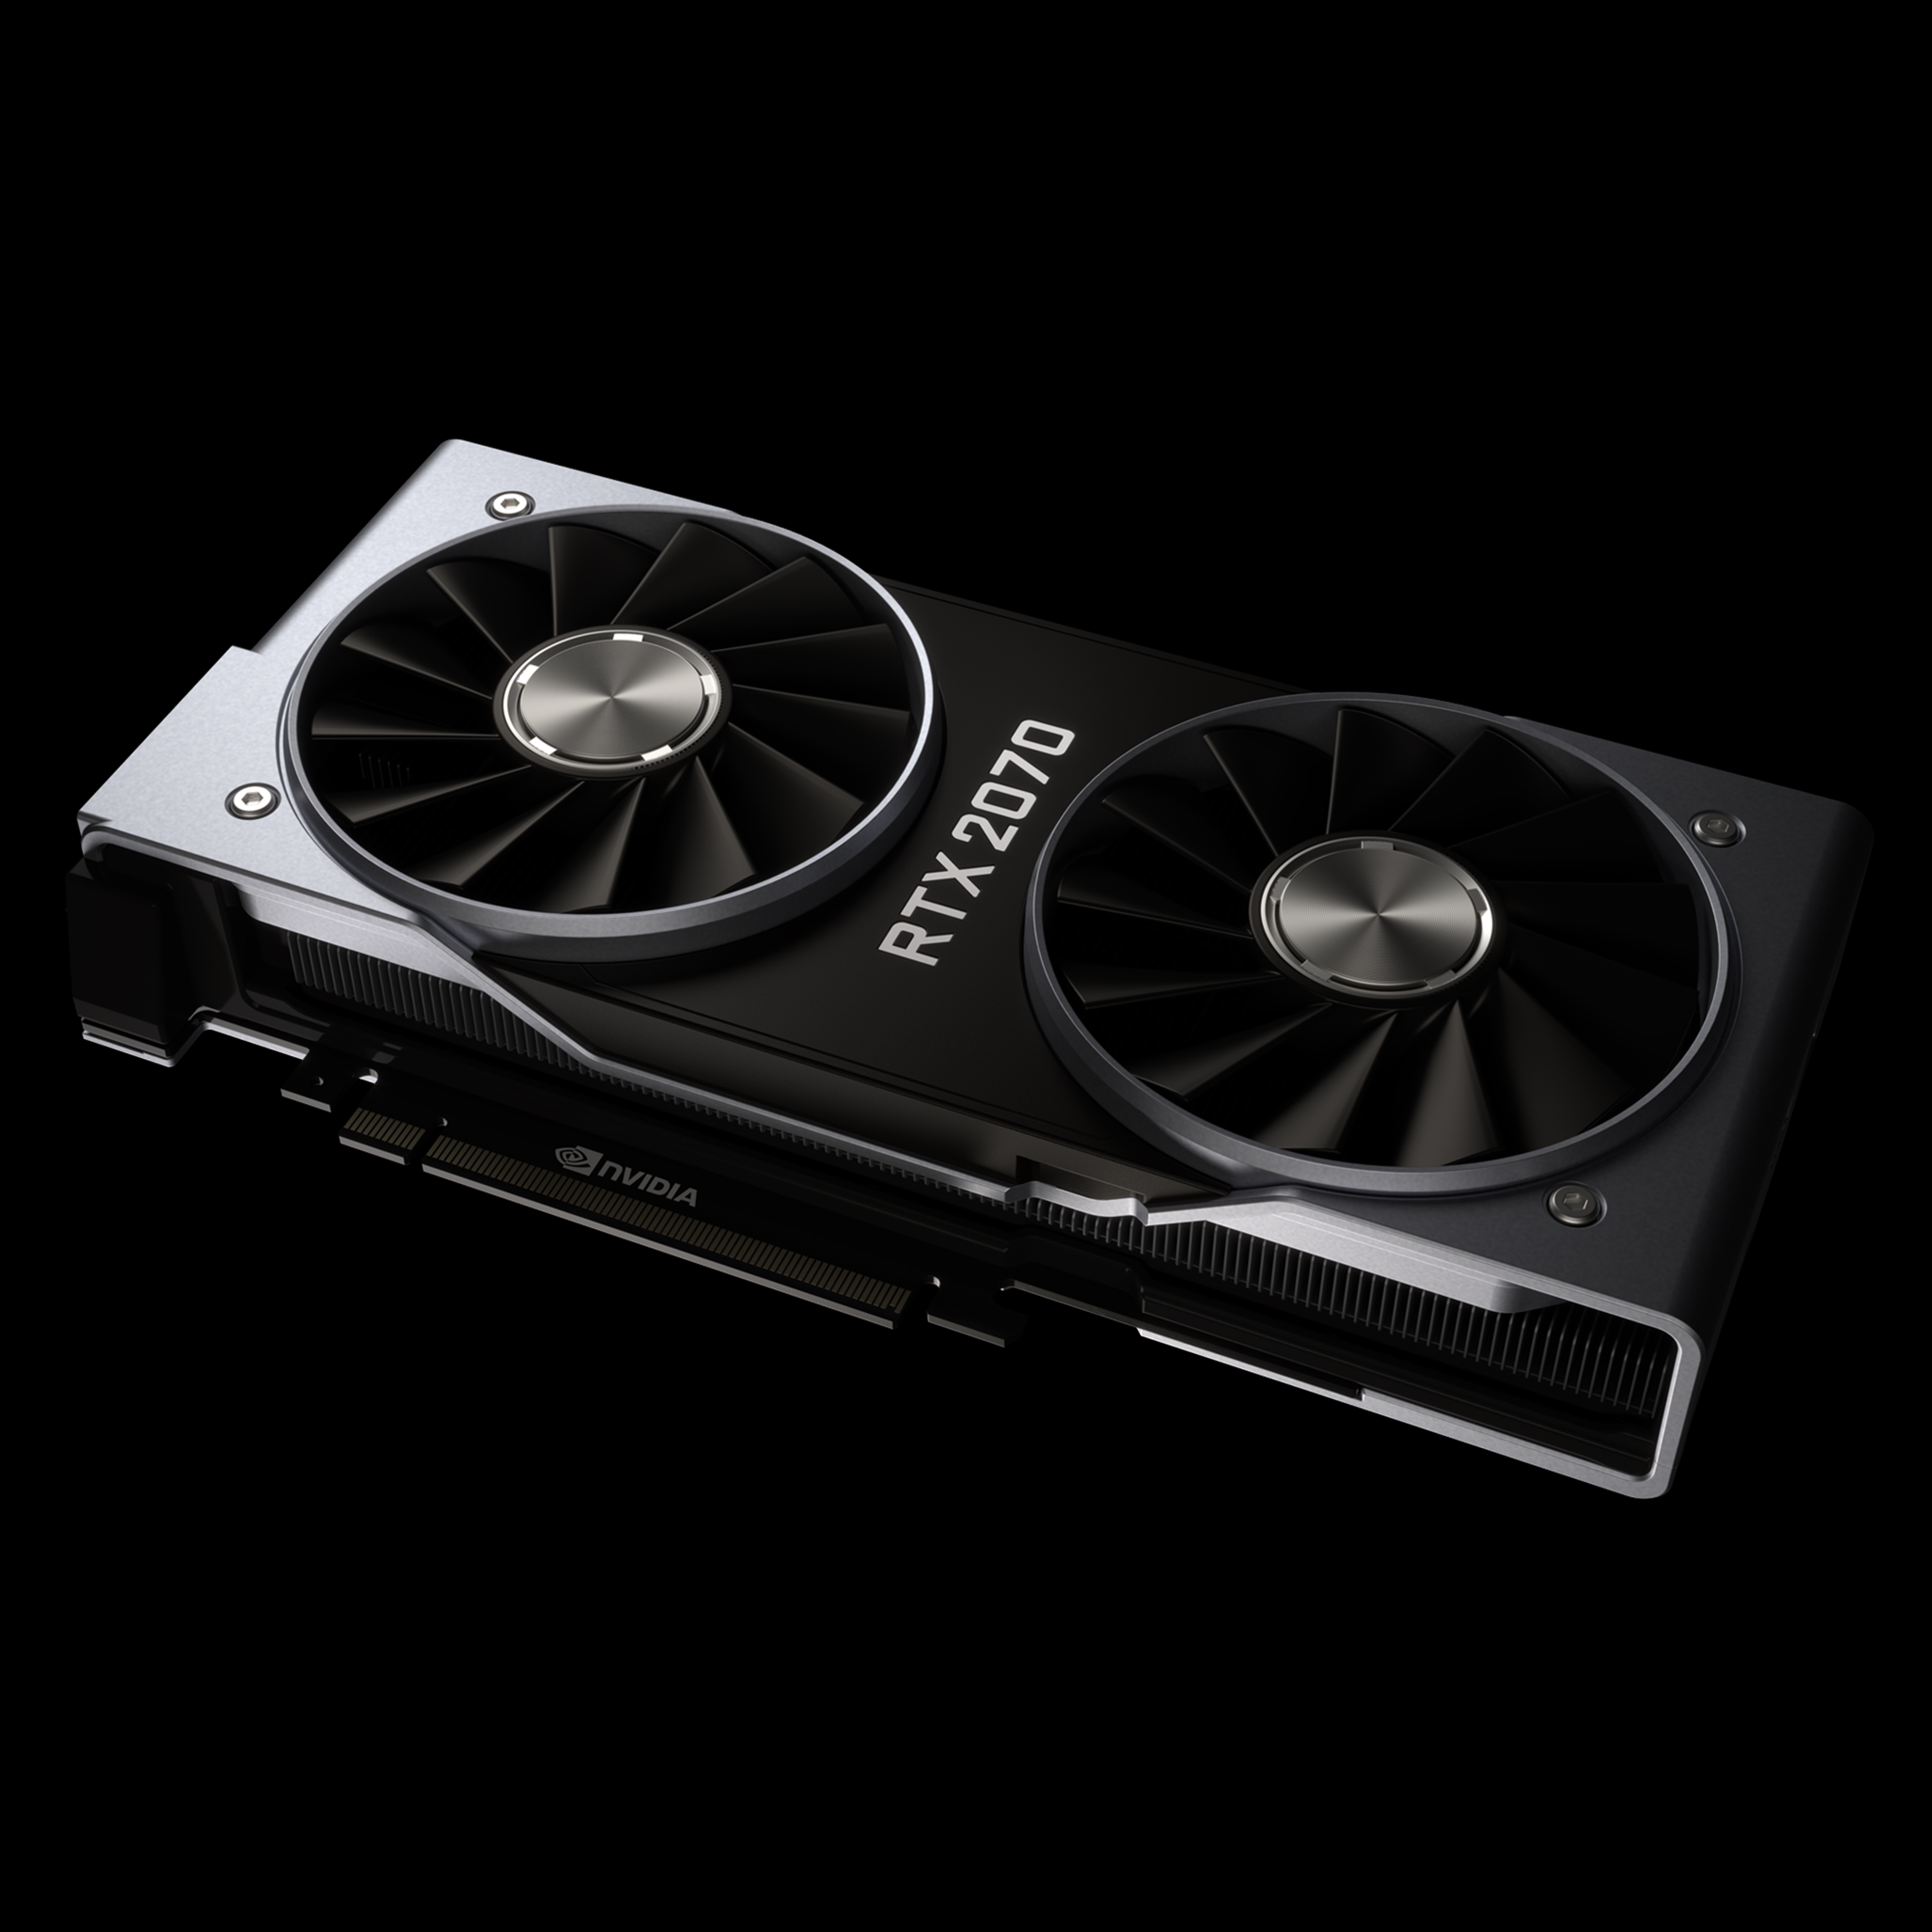 GeForce RTX 2070 Graphics Card